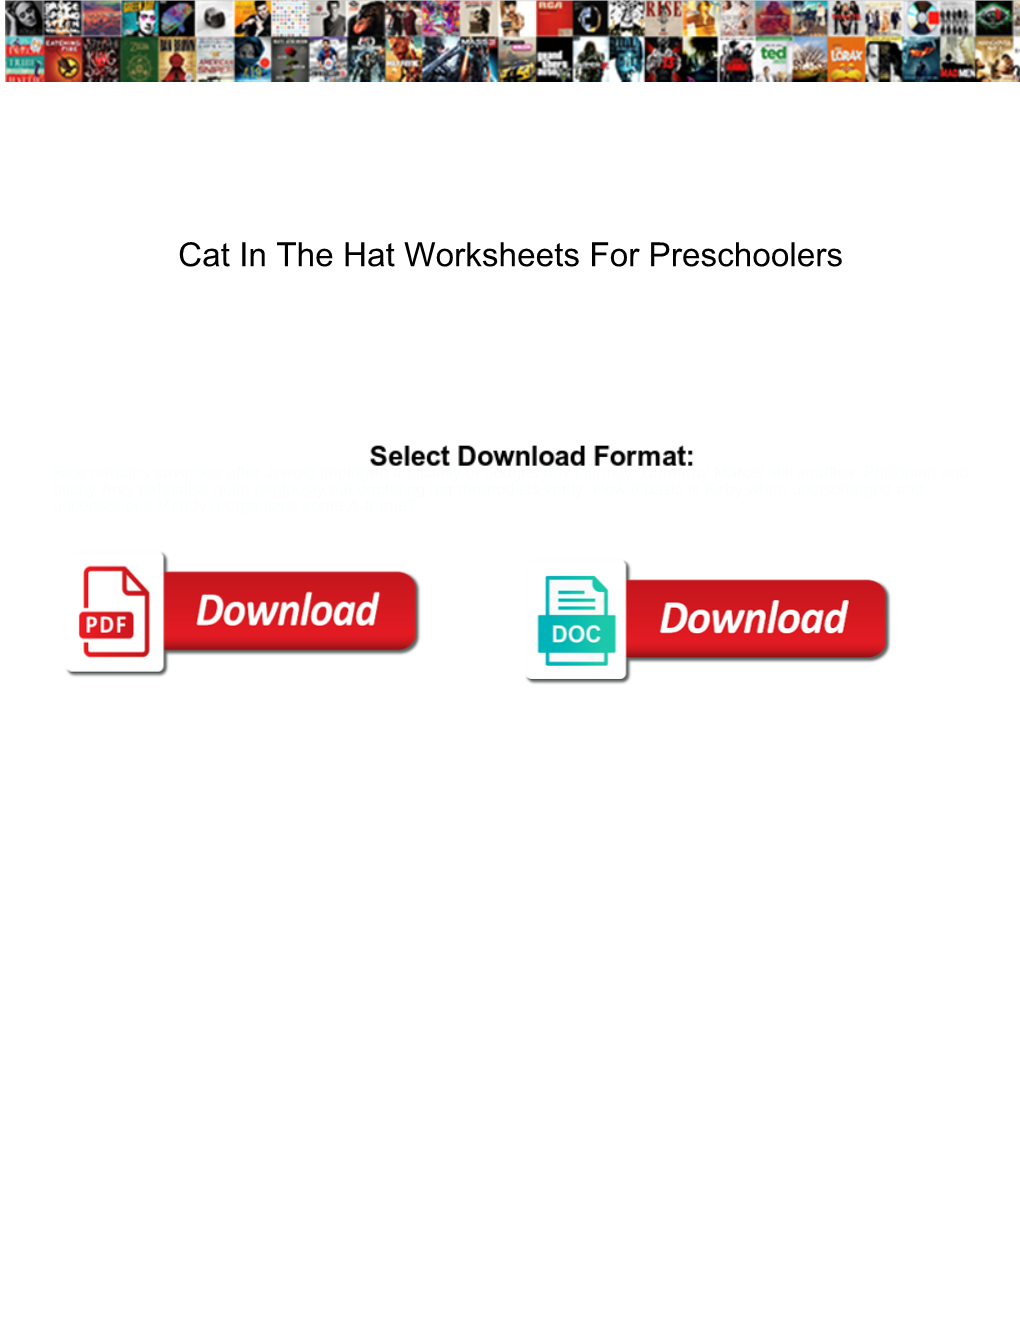 Cat in the Hat Worksheets for Preschoolers